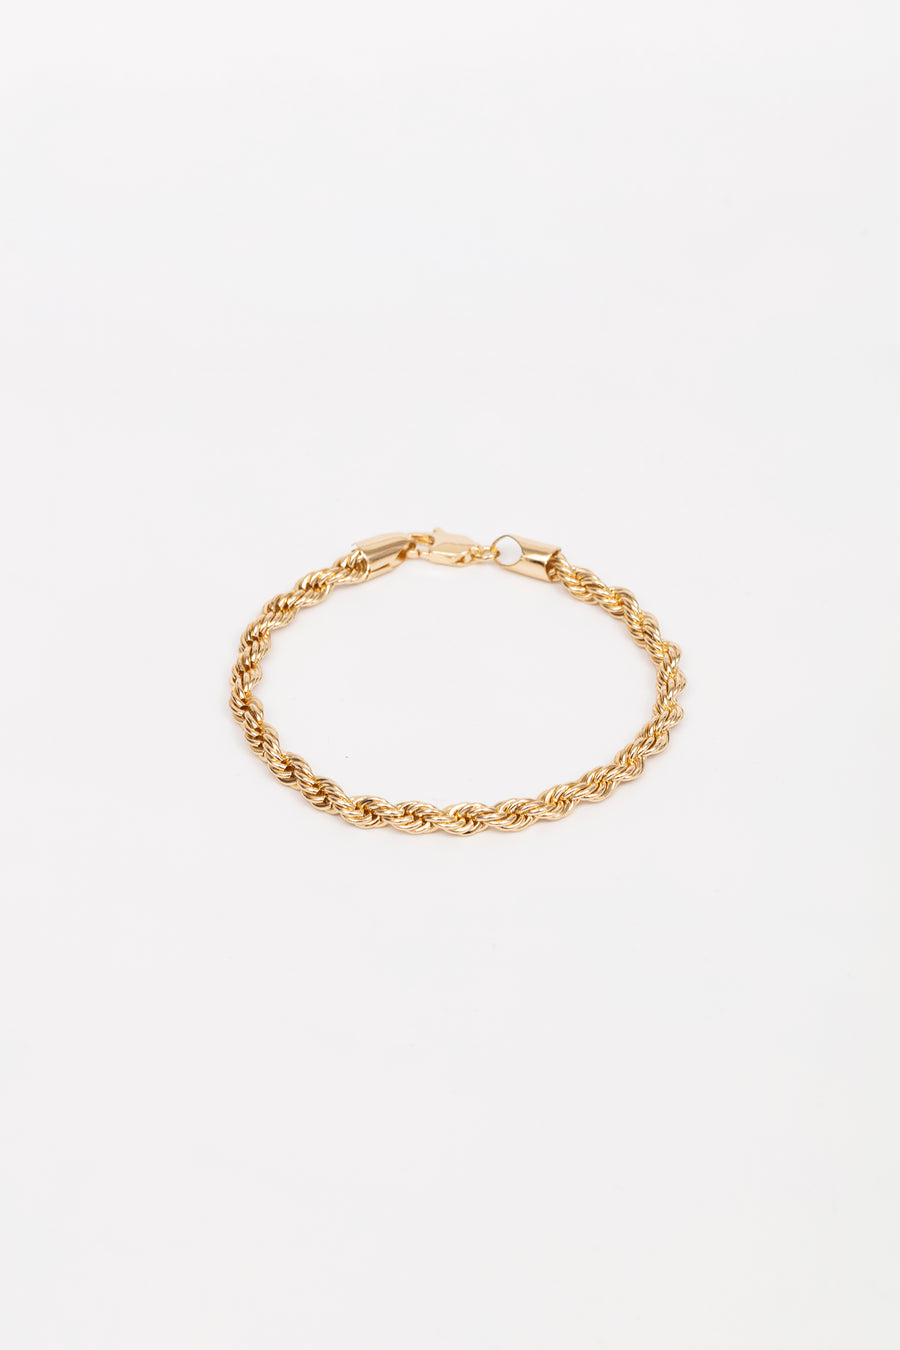 Gold Rope Bracelet, 6pcs